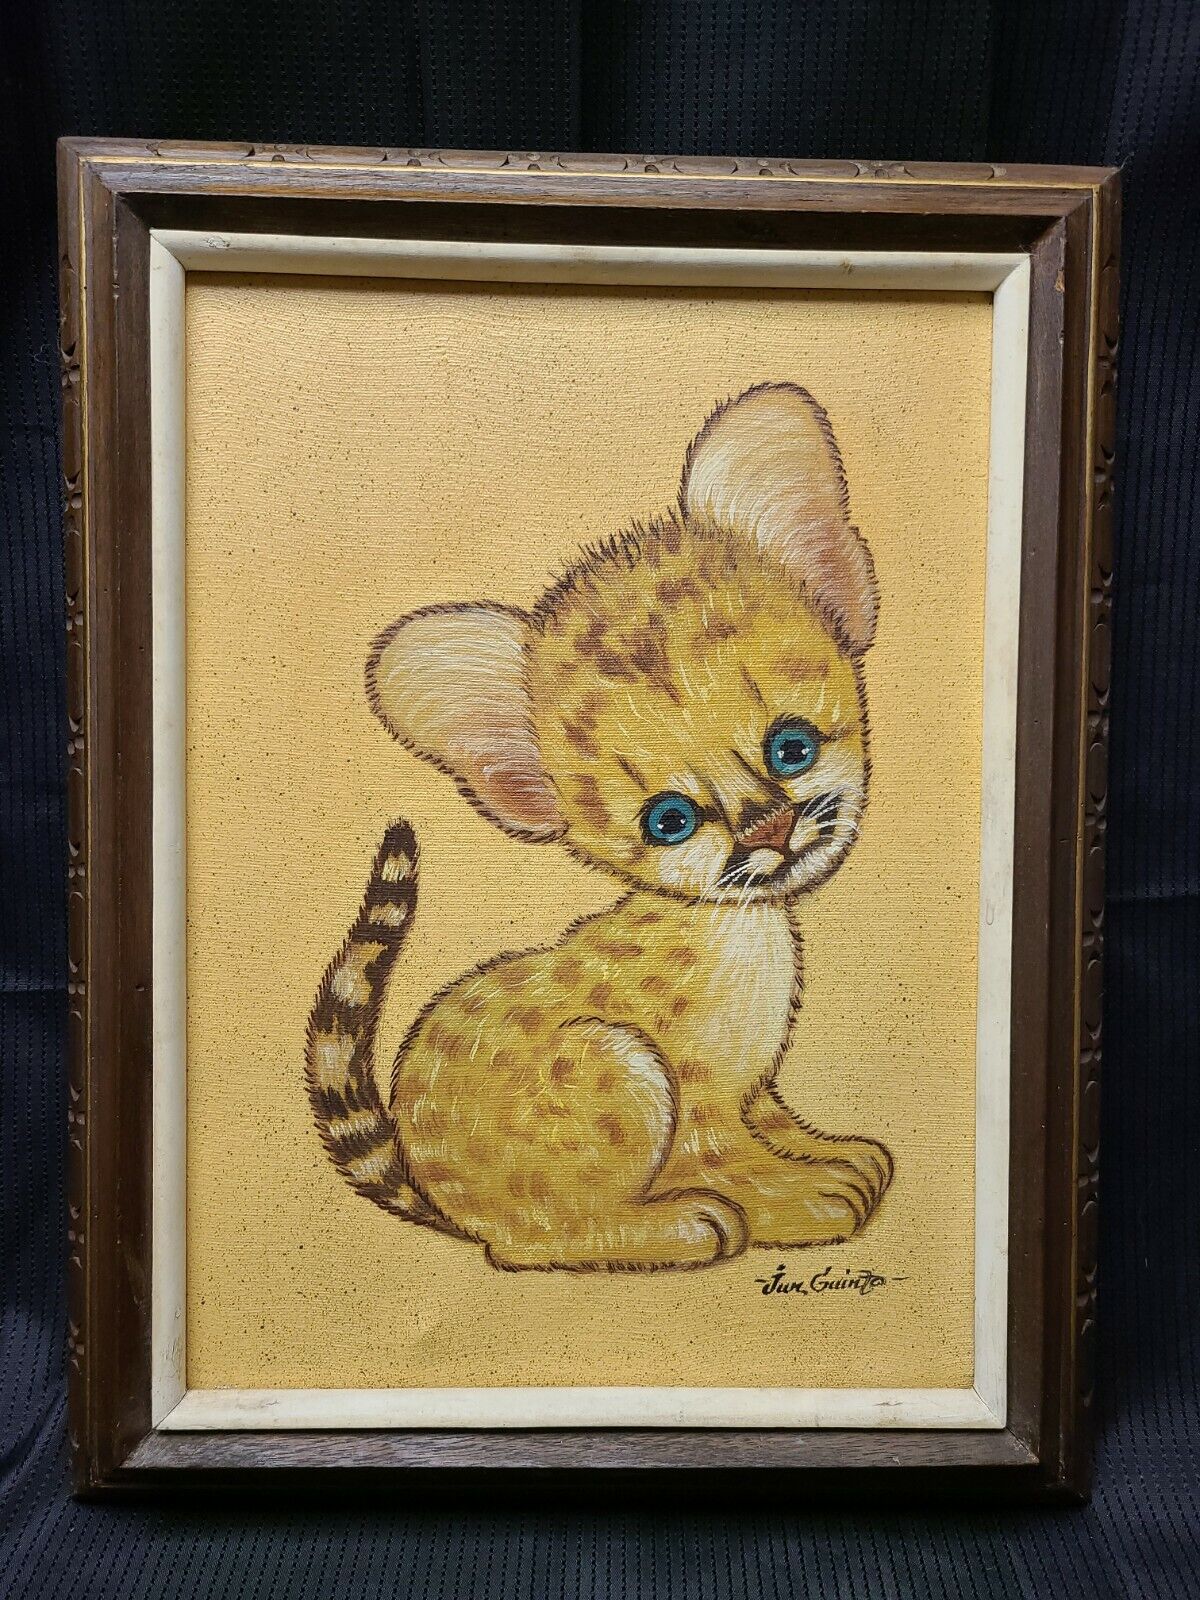 Vintage Wide Eyed Big Eye Cat Painting on Canvas Signed Jun Guinto Framed 